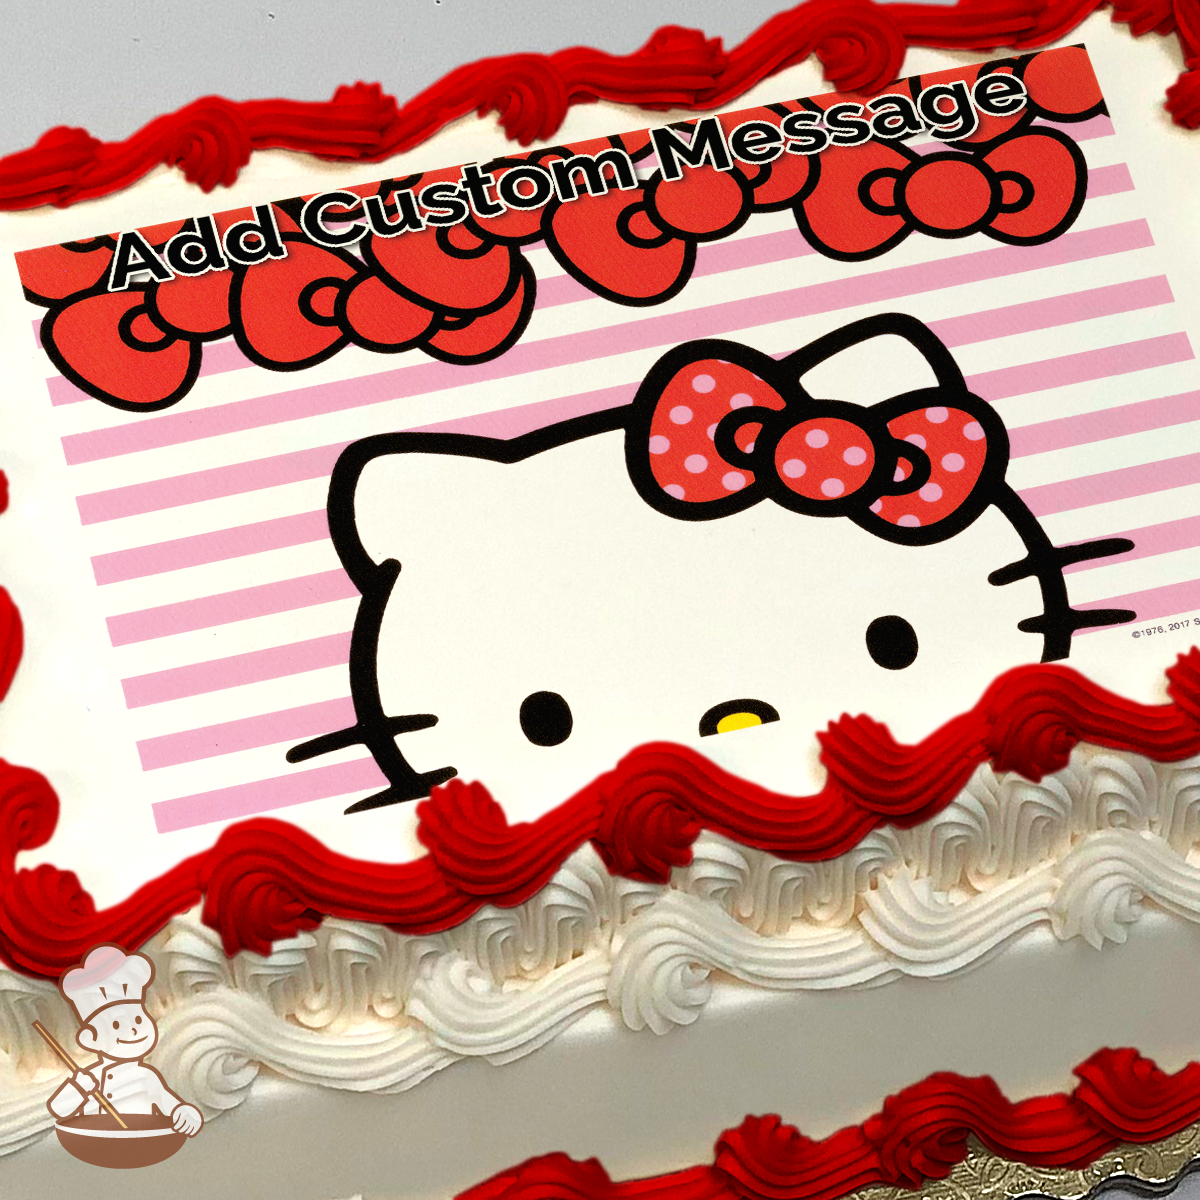 How To Make Hello Kitty Cake Design|ഹലോ കിറ്റി കേക്ക്|Panach - YouTube